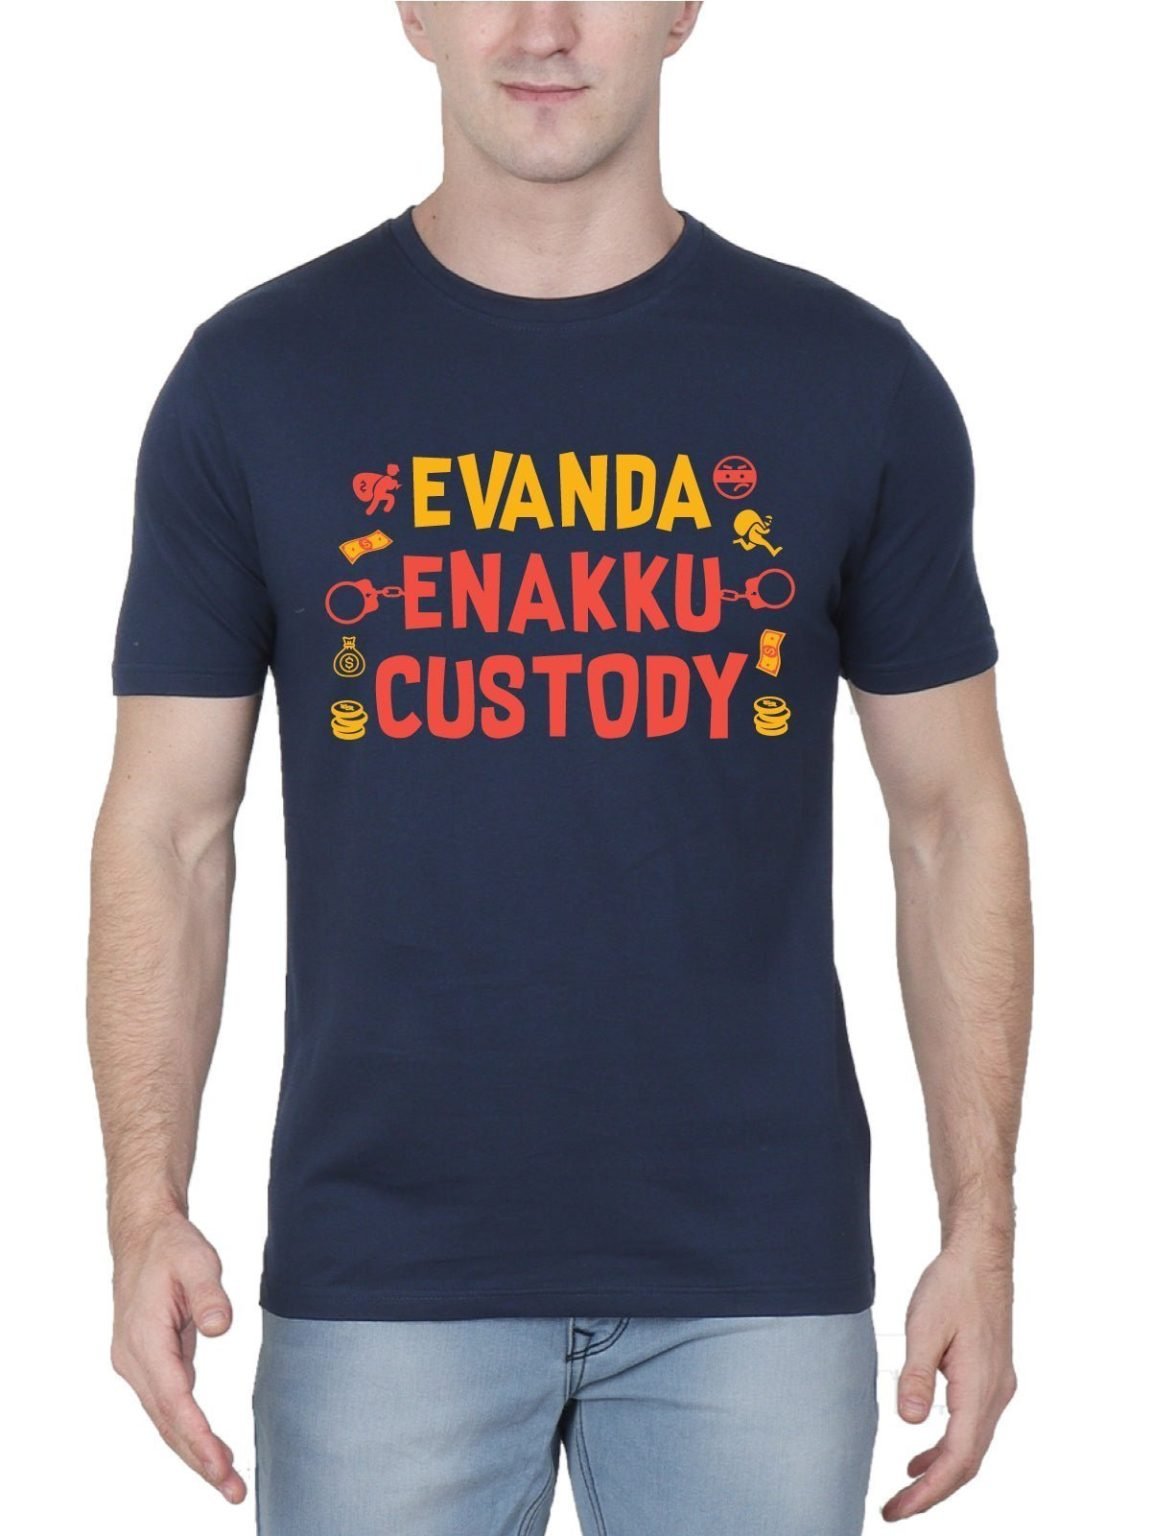 Evanda Enaku Custody - Mahaan Men's Navy Blue Half Sleeve Round Neck T-shirt